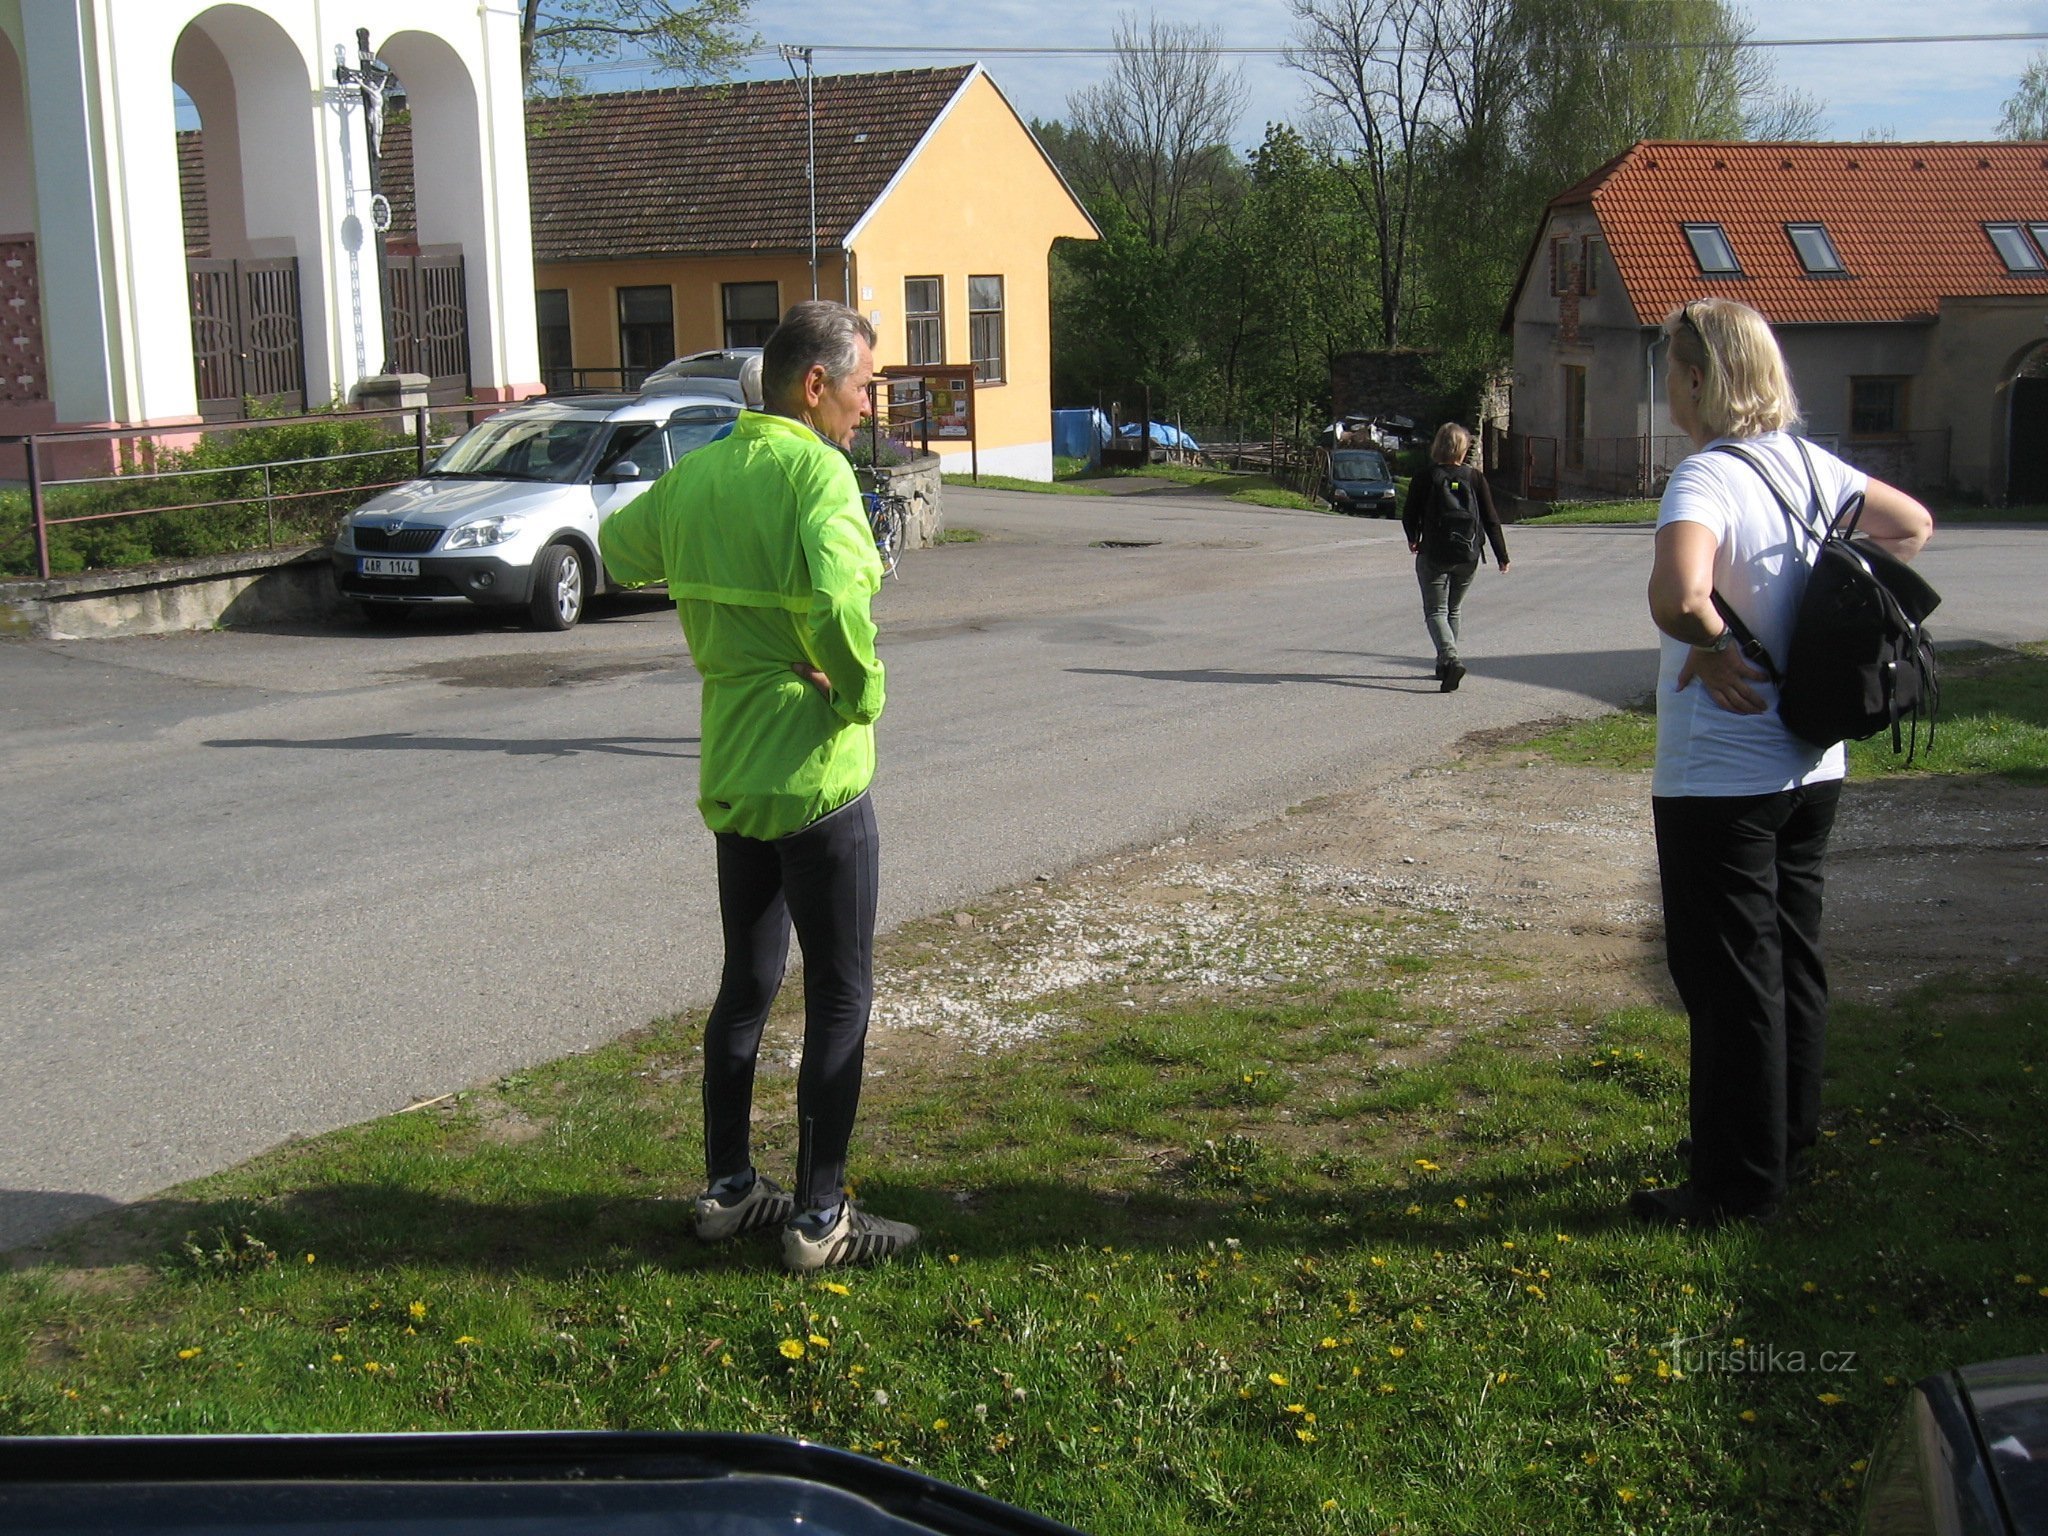 Meeting in the village in Kozlov